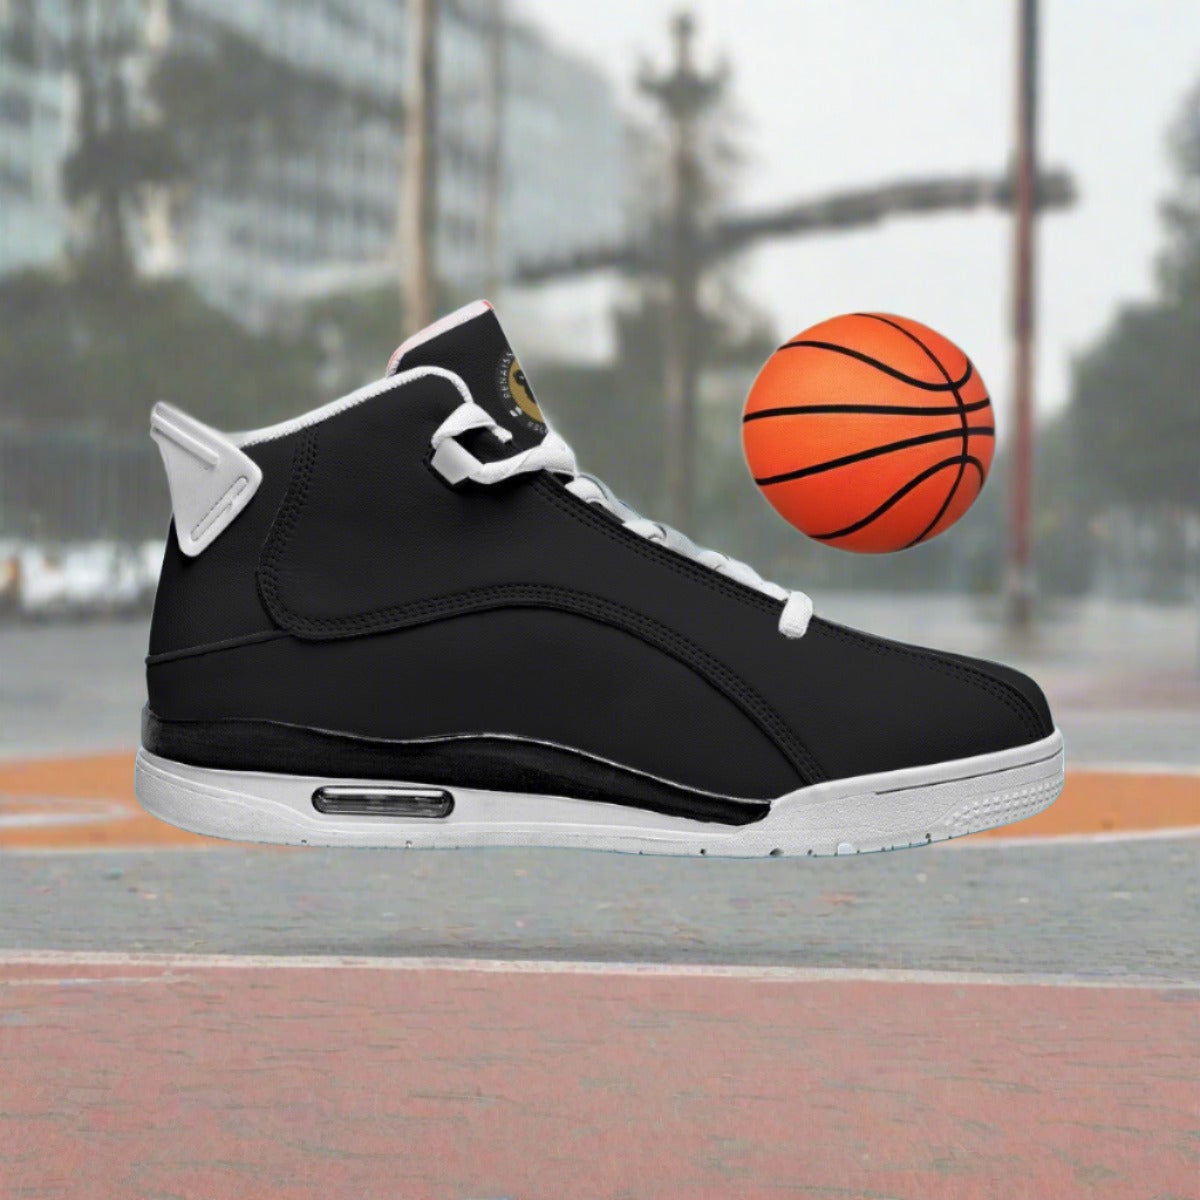 Taxxman Black Logo  Shock Absorption & Non-Slip Basketball Shoes